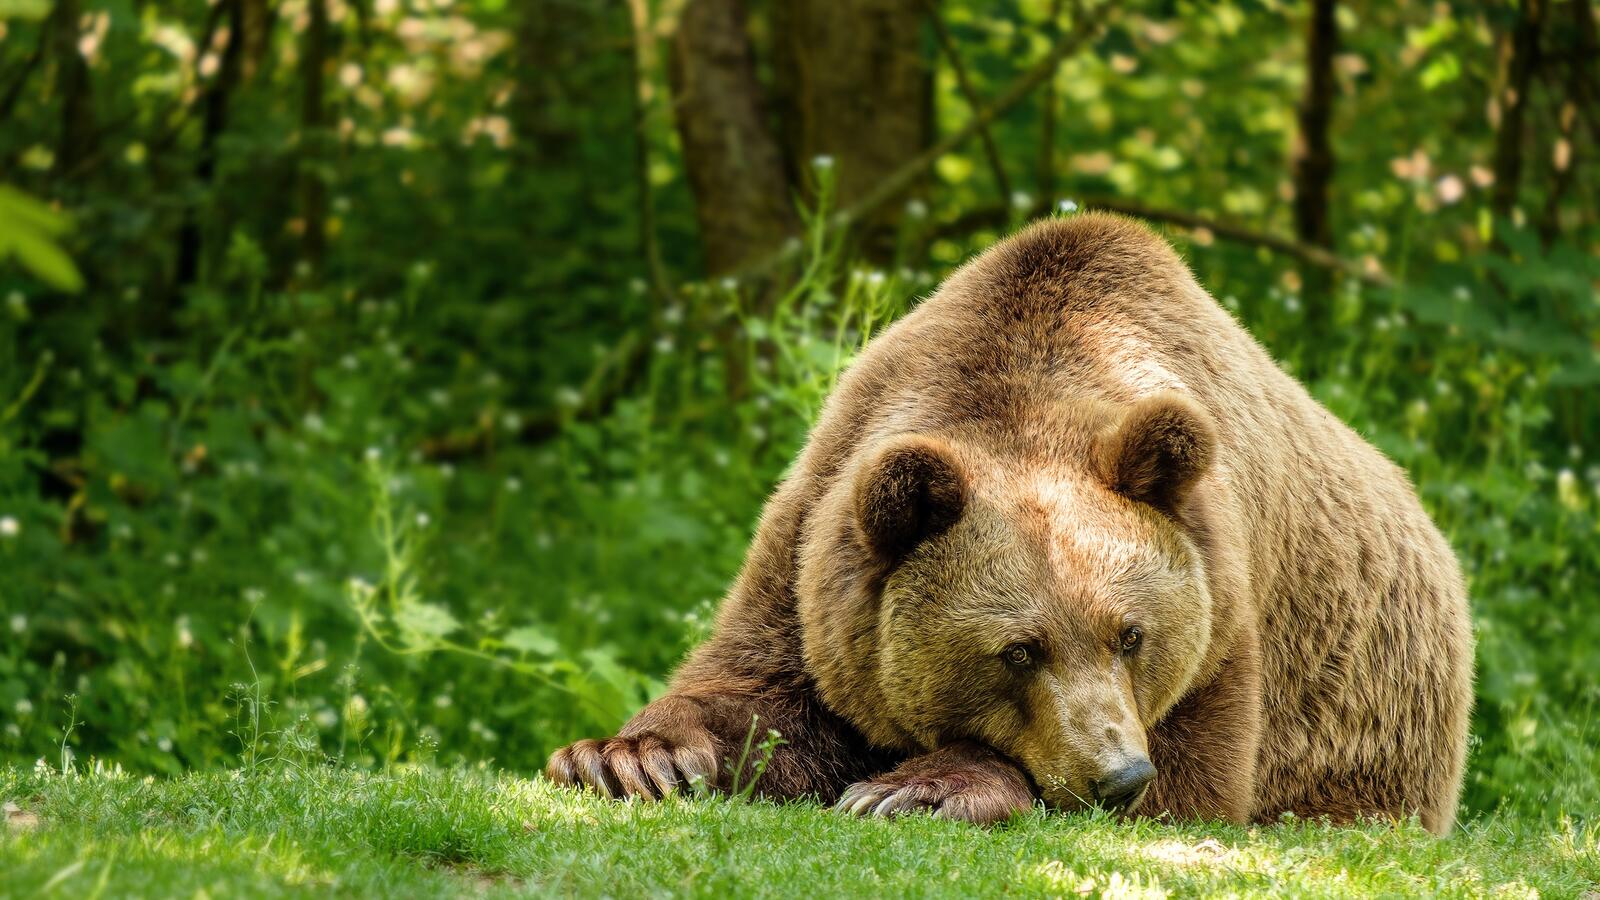 Free photo A big bear on a green lawn